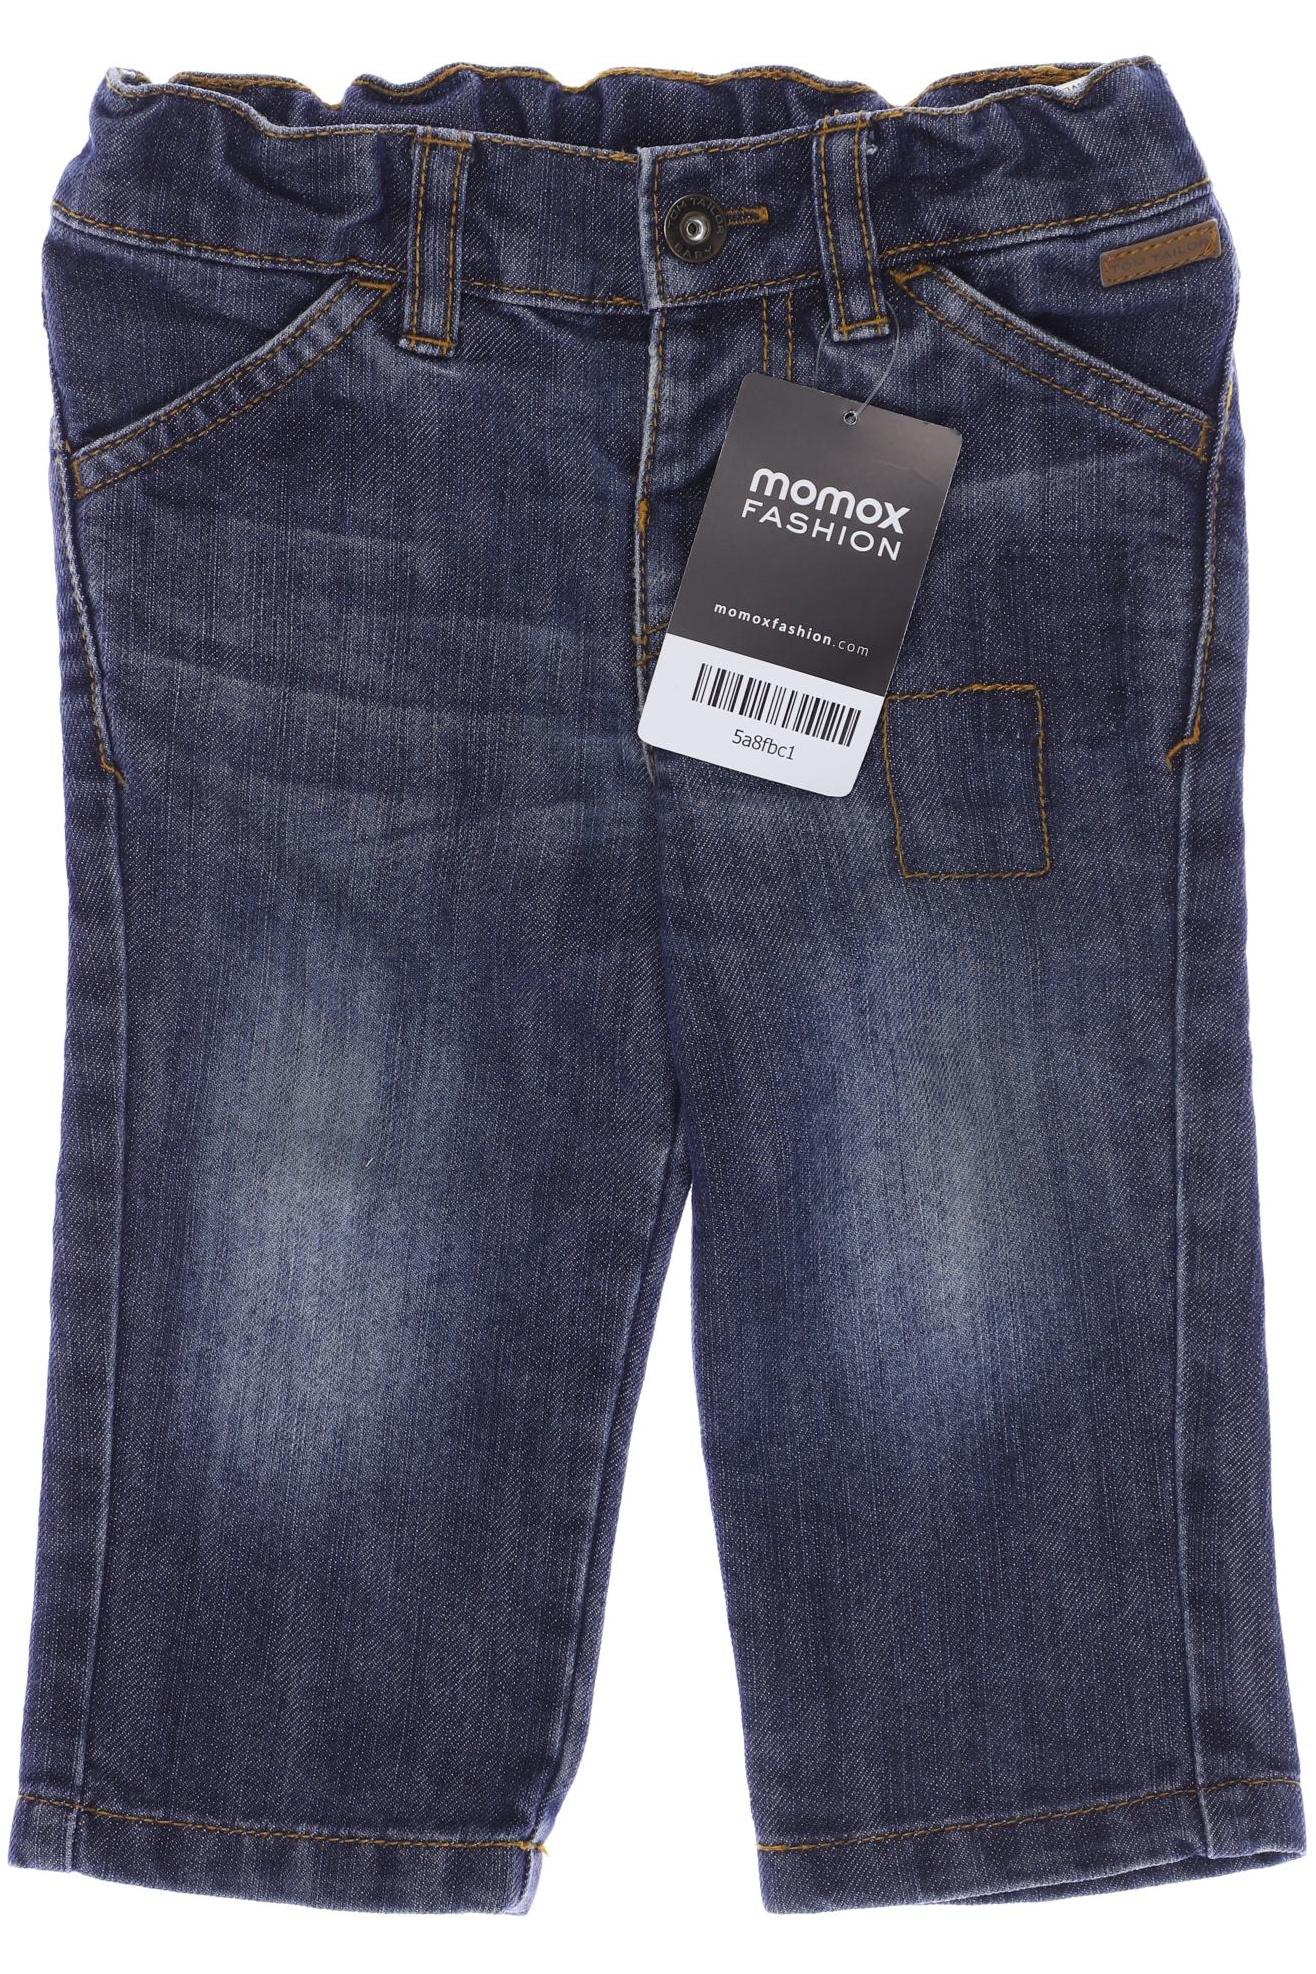 TOM Tailor Denim Herren Jeans, blau, Gr. 74 von Tom Tailor Denim